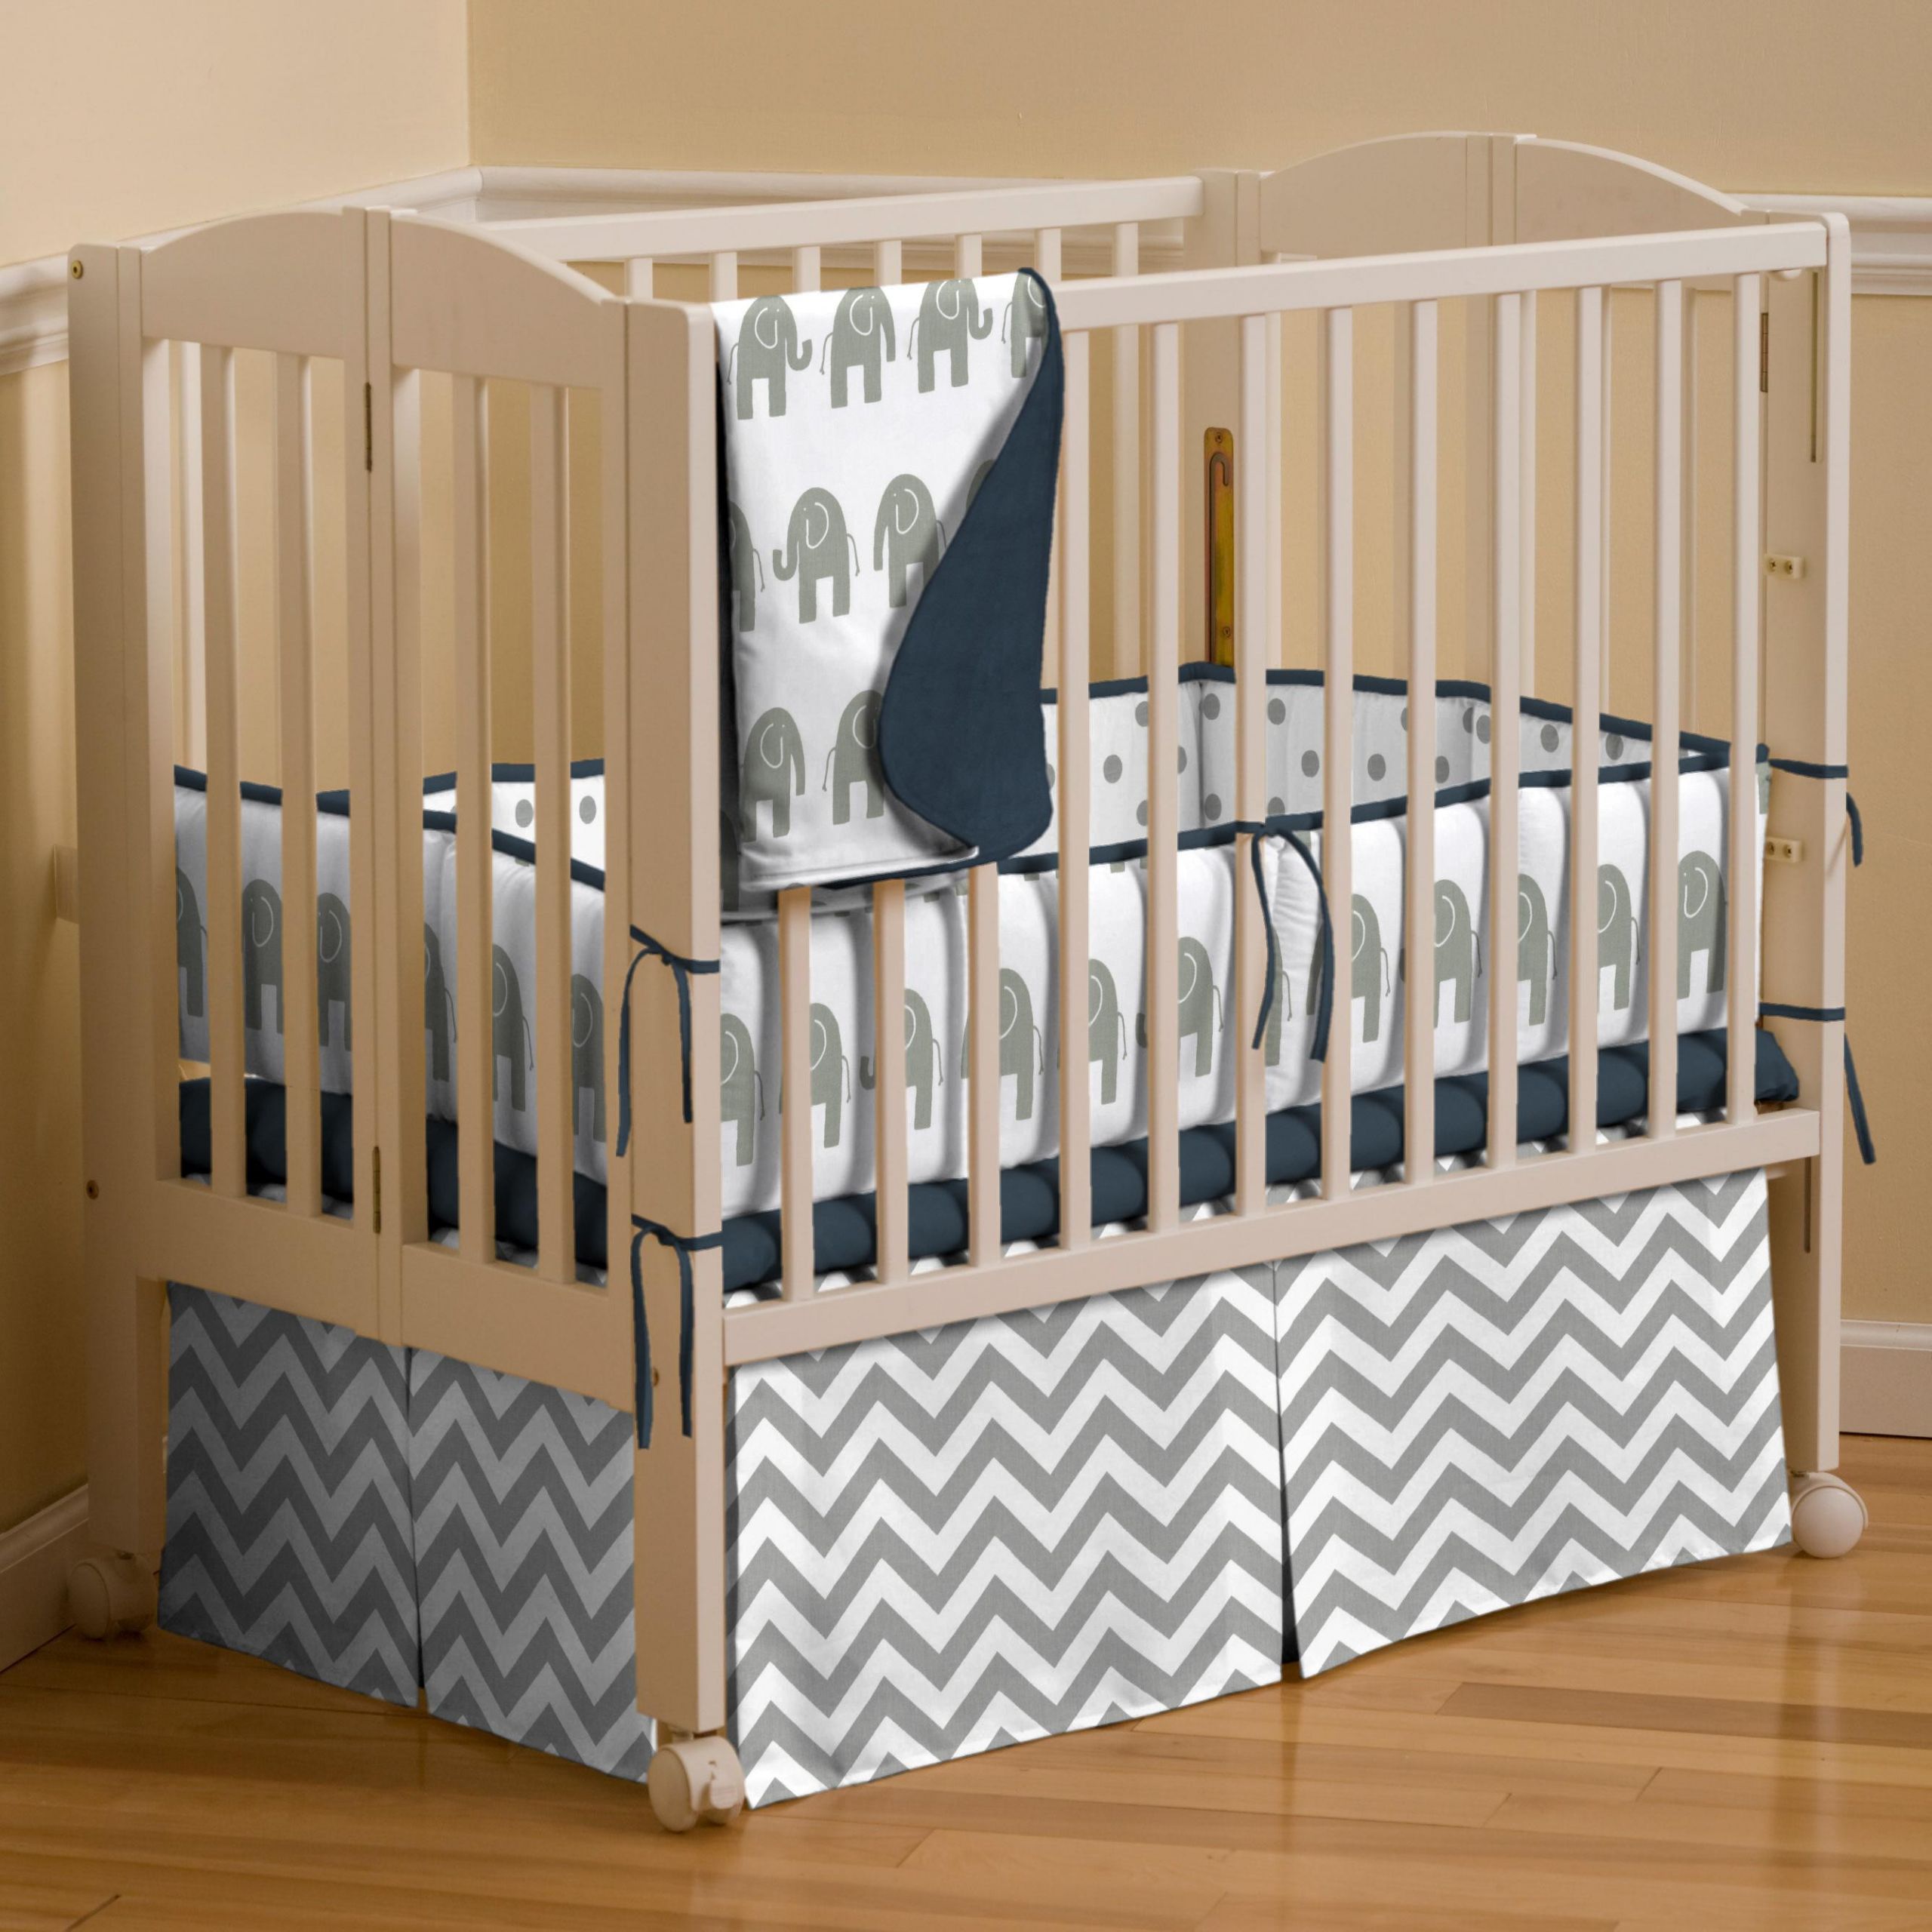 Baby Crib Decor
 Navy and Gray Elephants Mini Crib Bedding